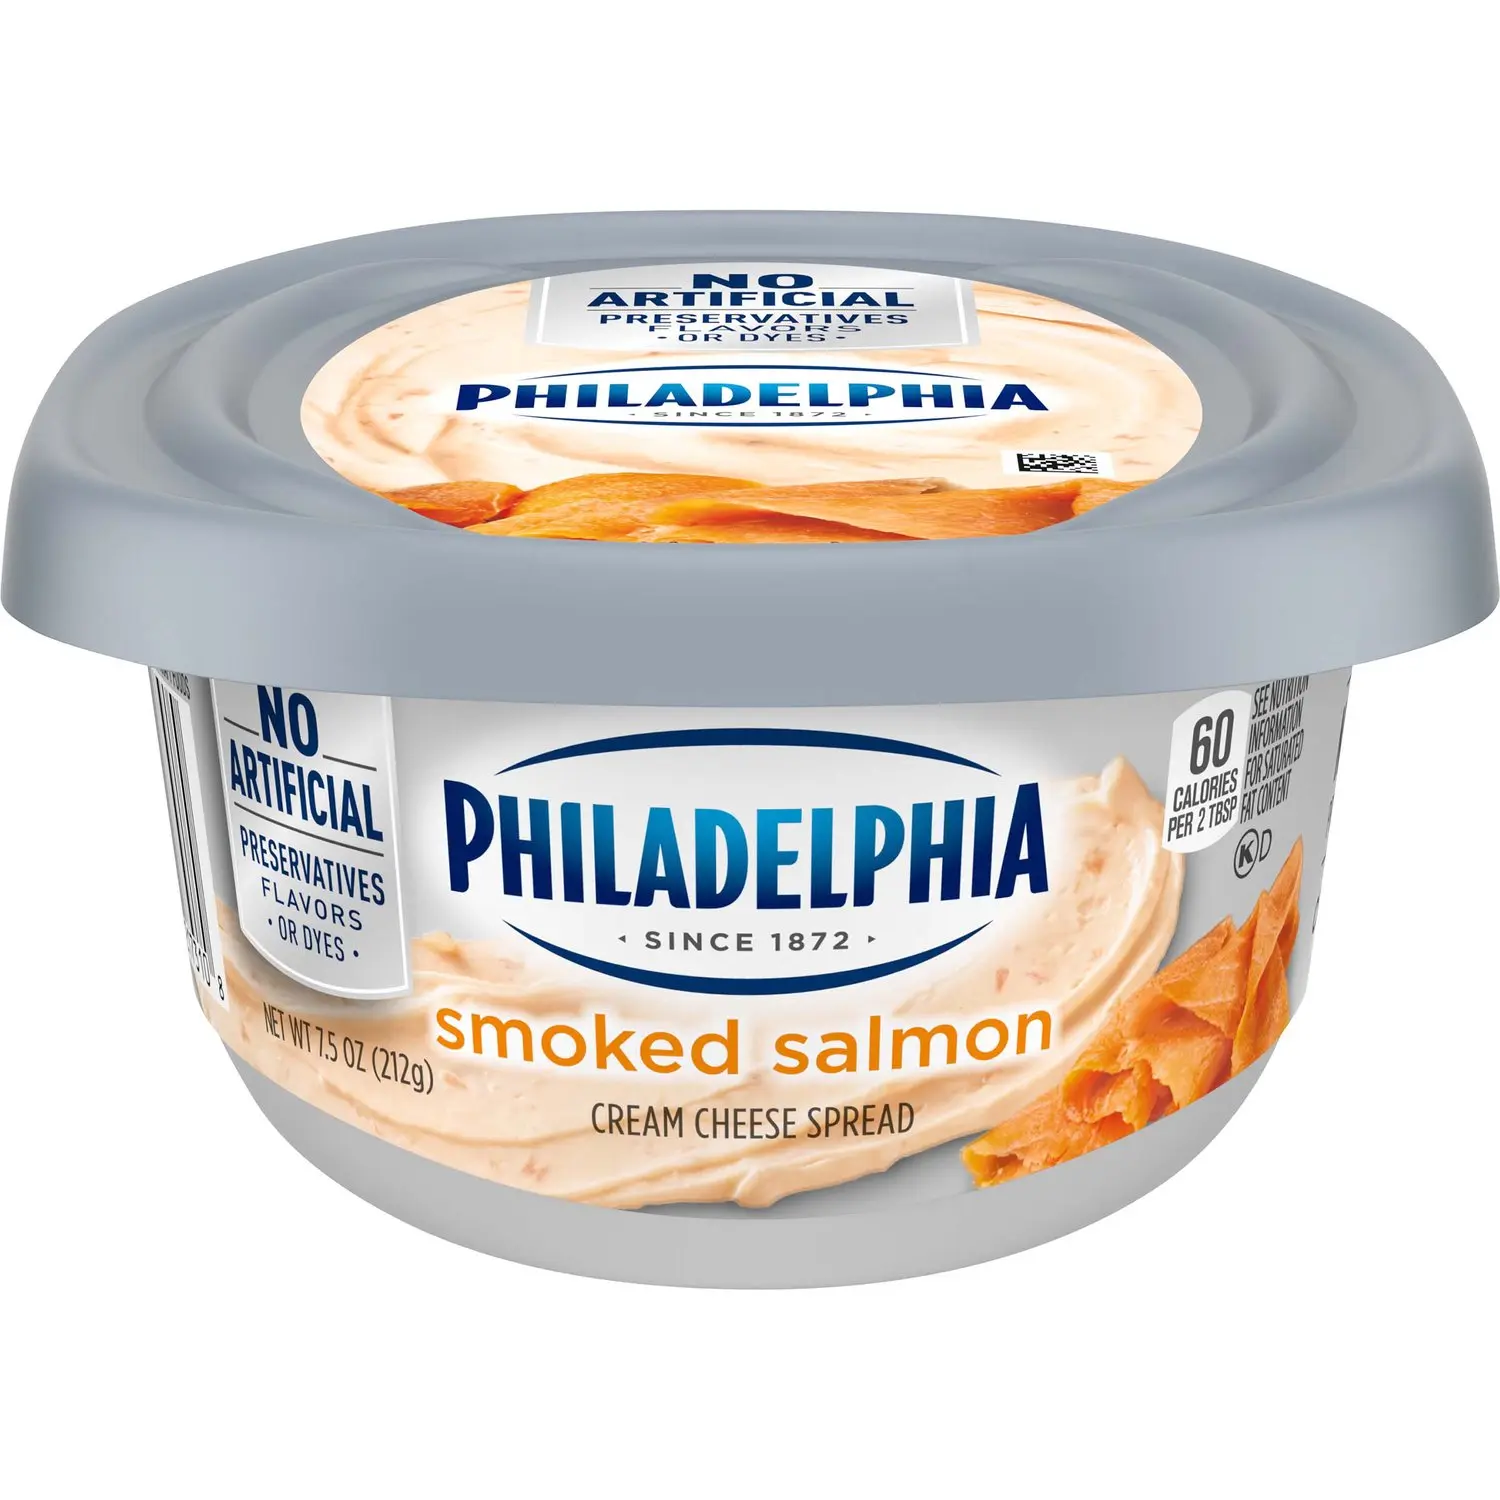 smoked salmon cream cheese philadelphia - Why is Philadelphia famous for cream cheese